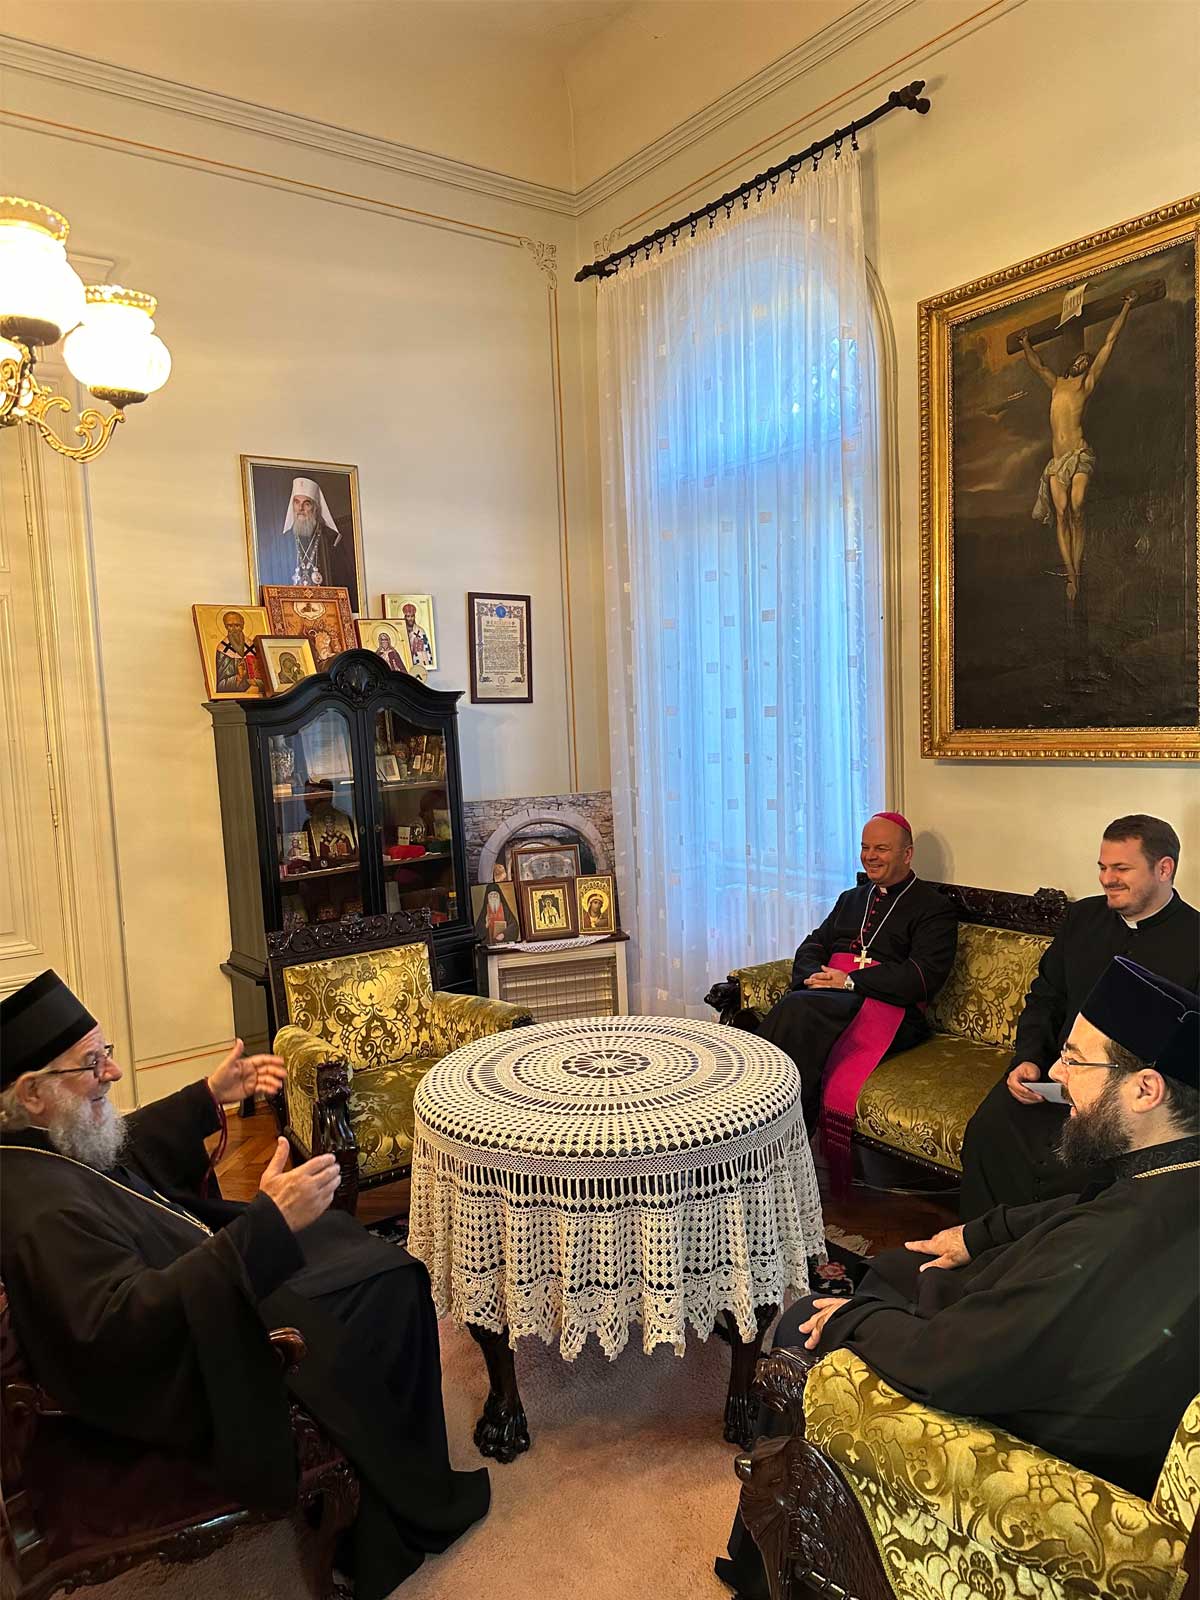 Епископ сремски примио у посету римокатоличког сремског Бискупа коадјутора